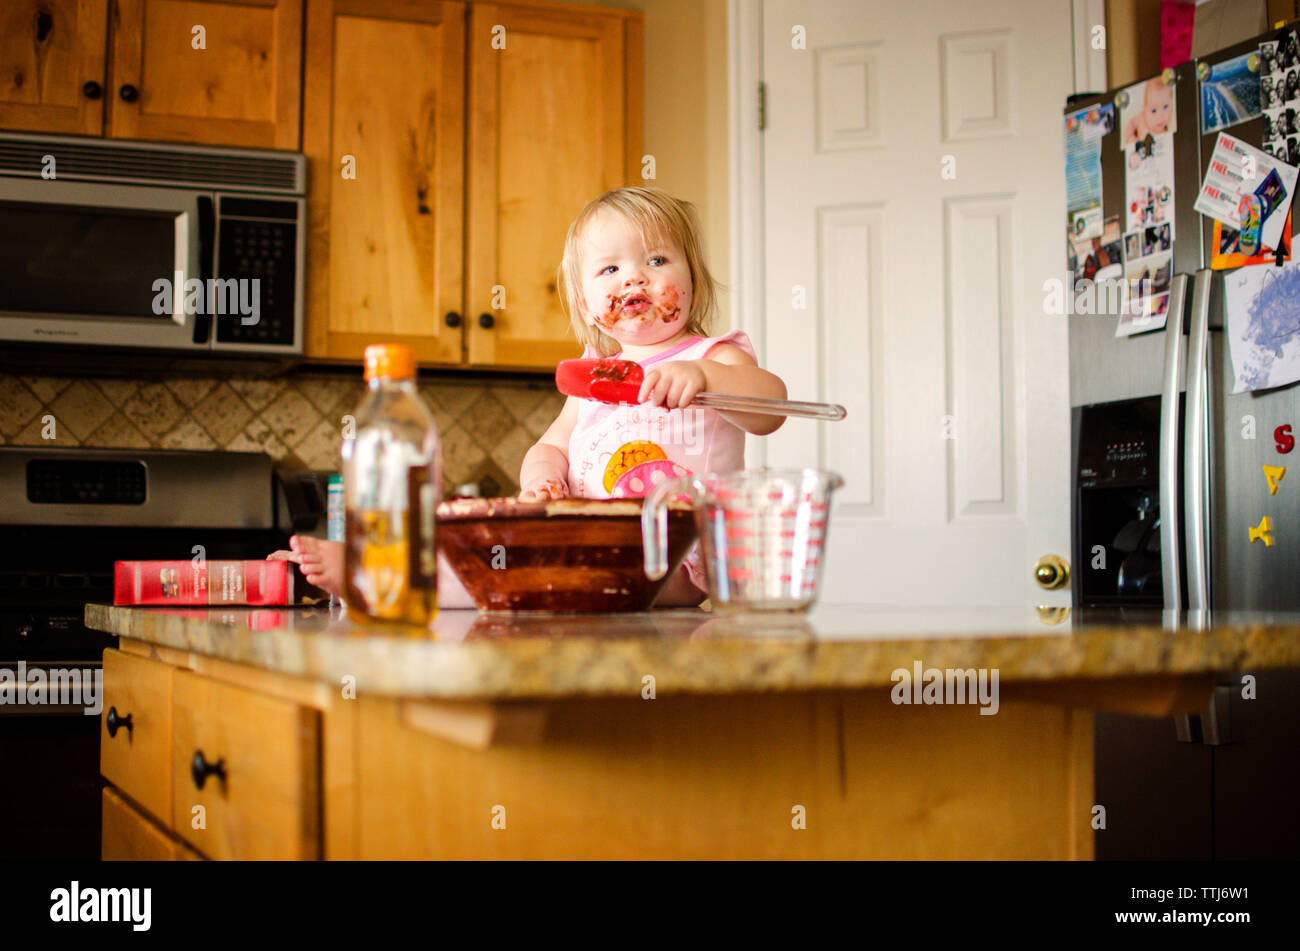 Girl eating chocolate while sitting on kitchen island Stock Photo